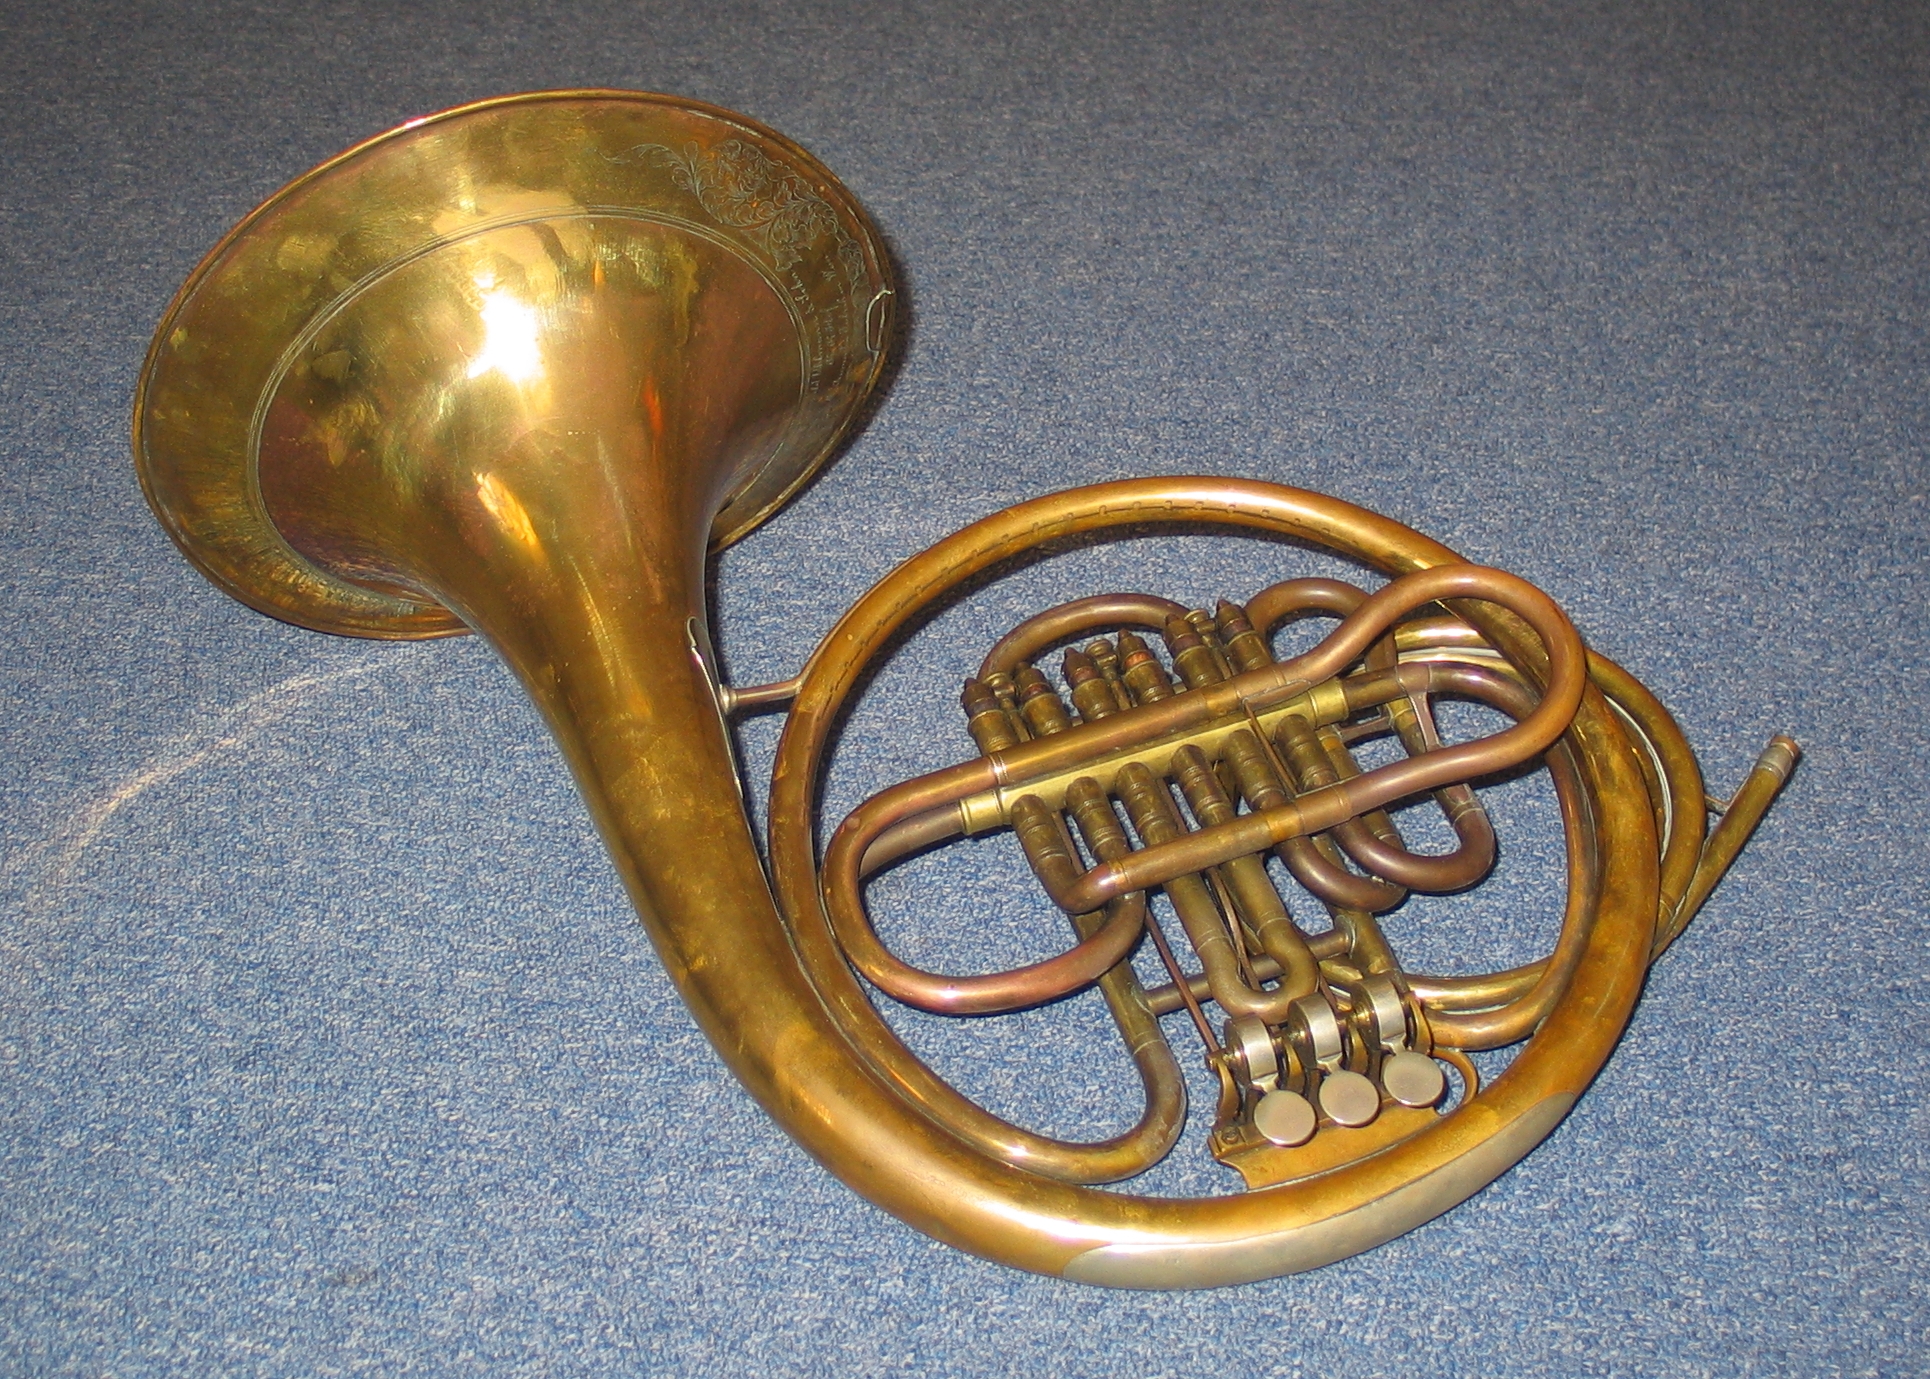 No.547 Uhlmann Vienna horn (classic layout)